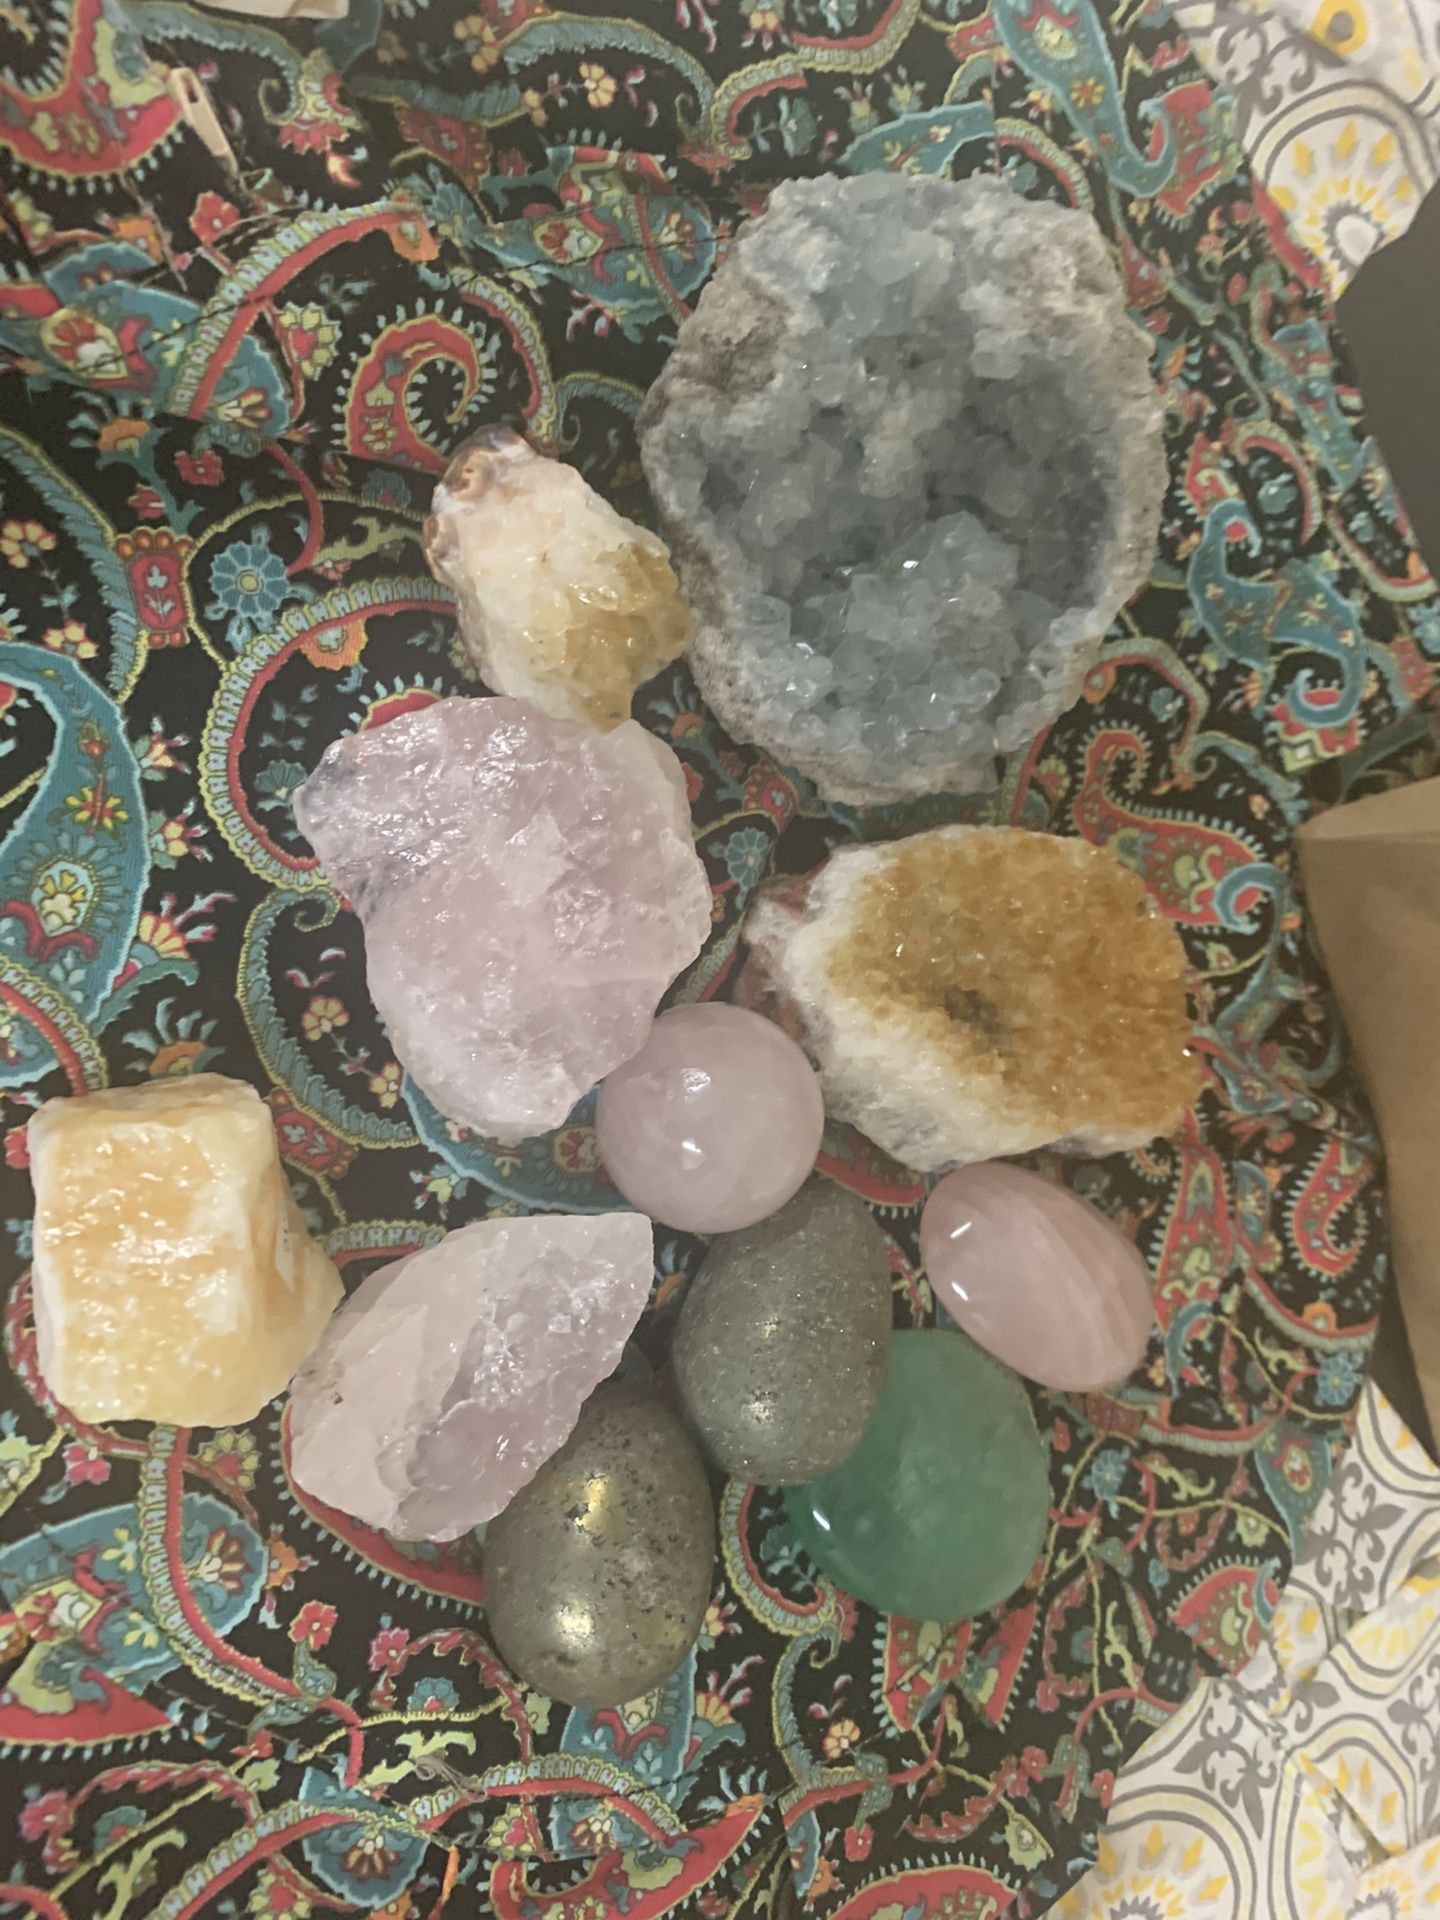 Crystal collection: celestite, rose quartz, calcite, pyrite and citrine